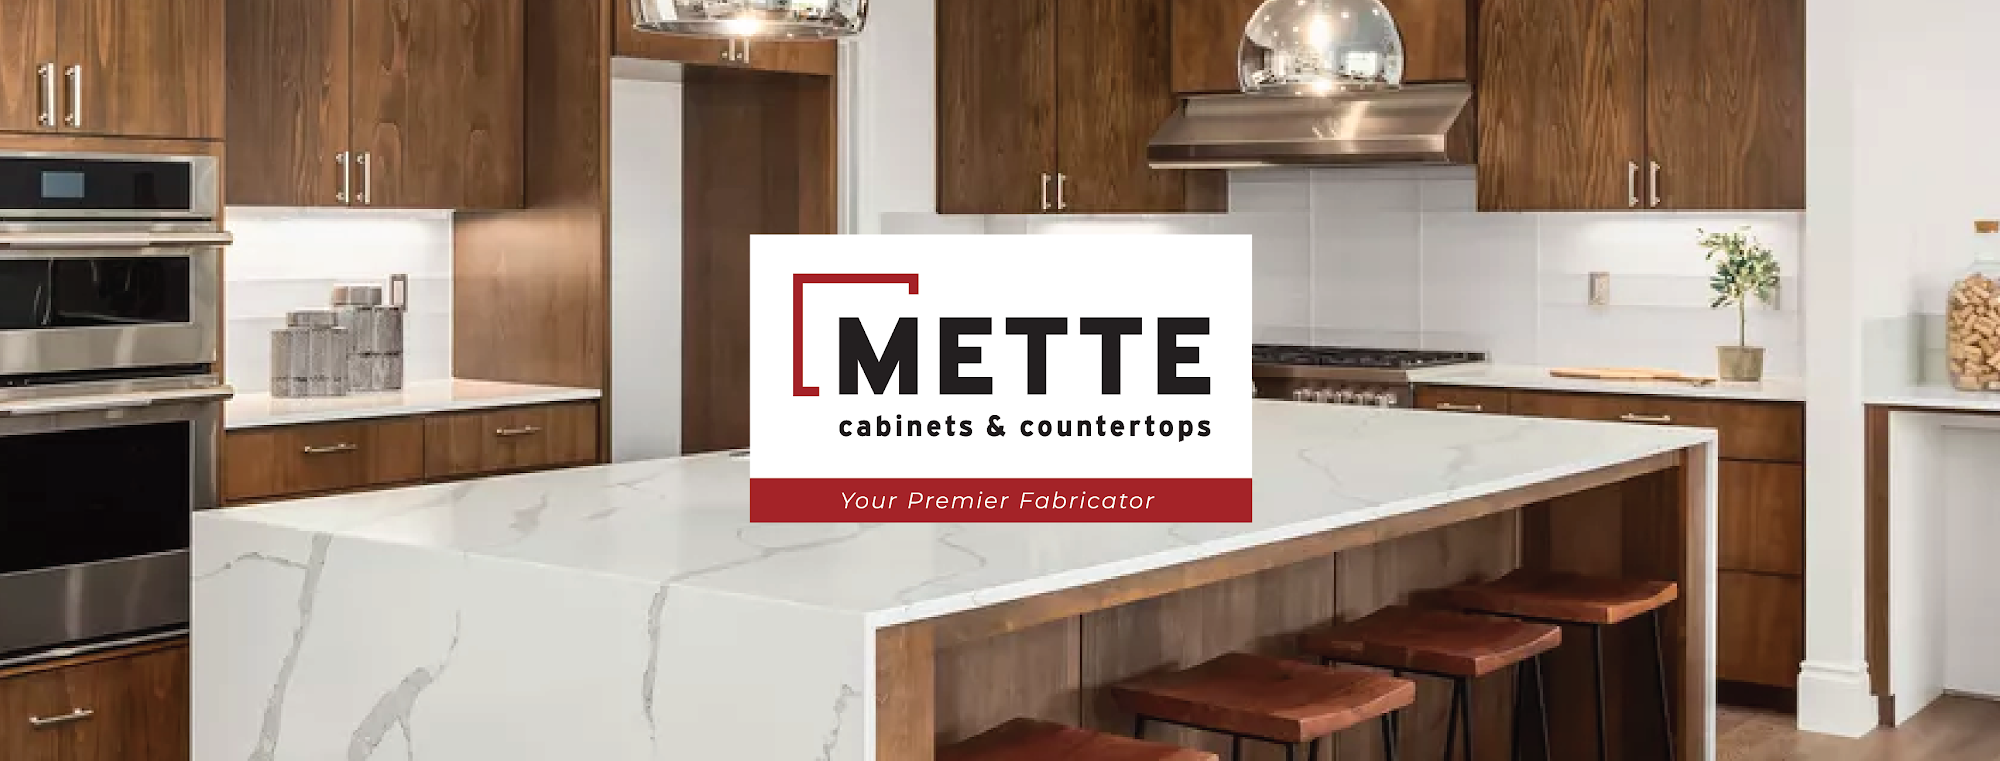 Mette Cabinets & Countertops